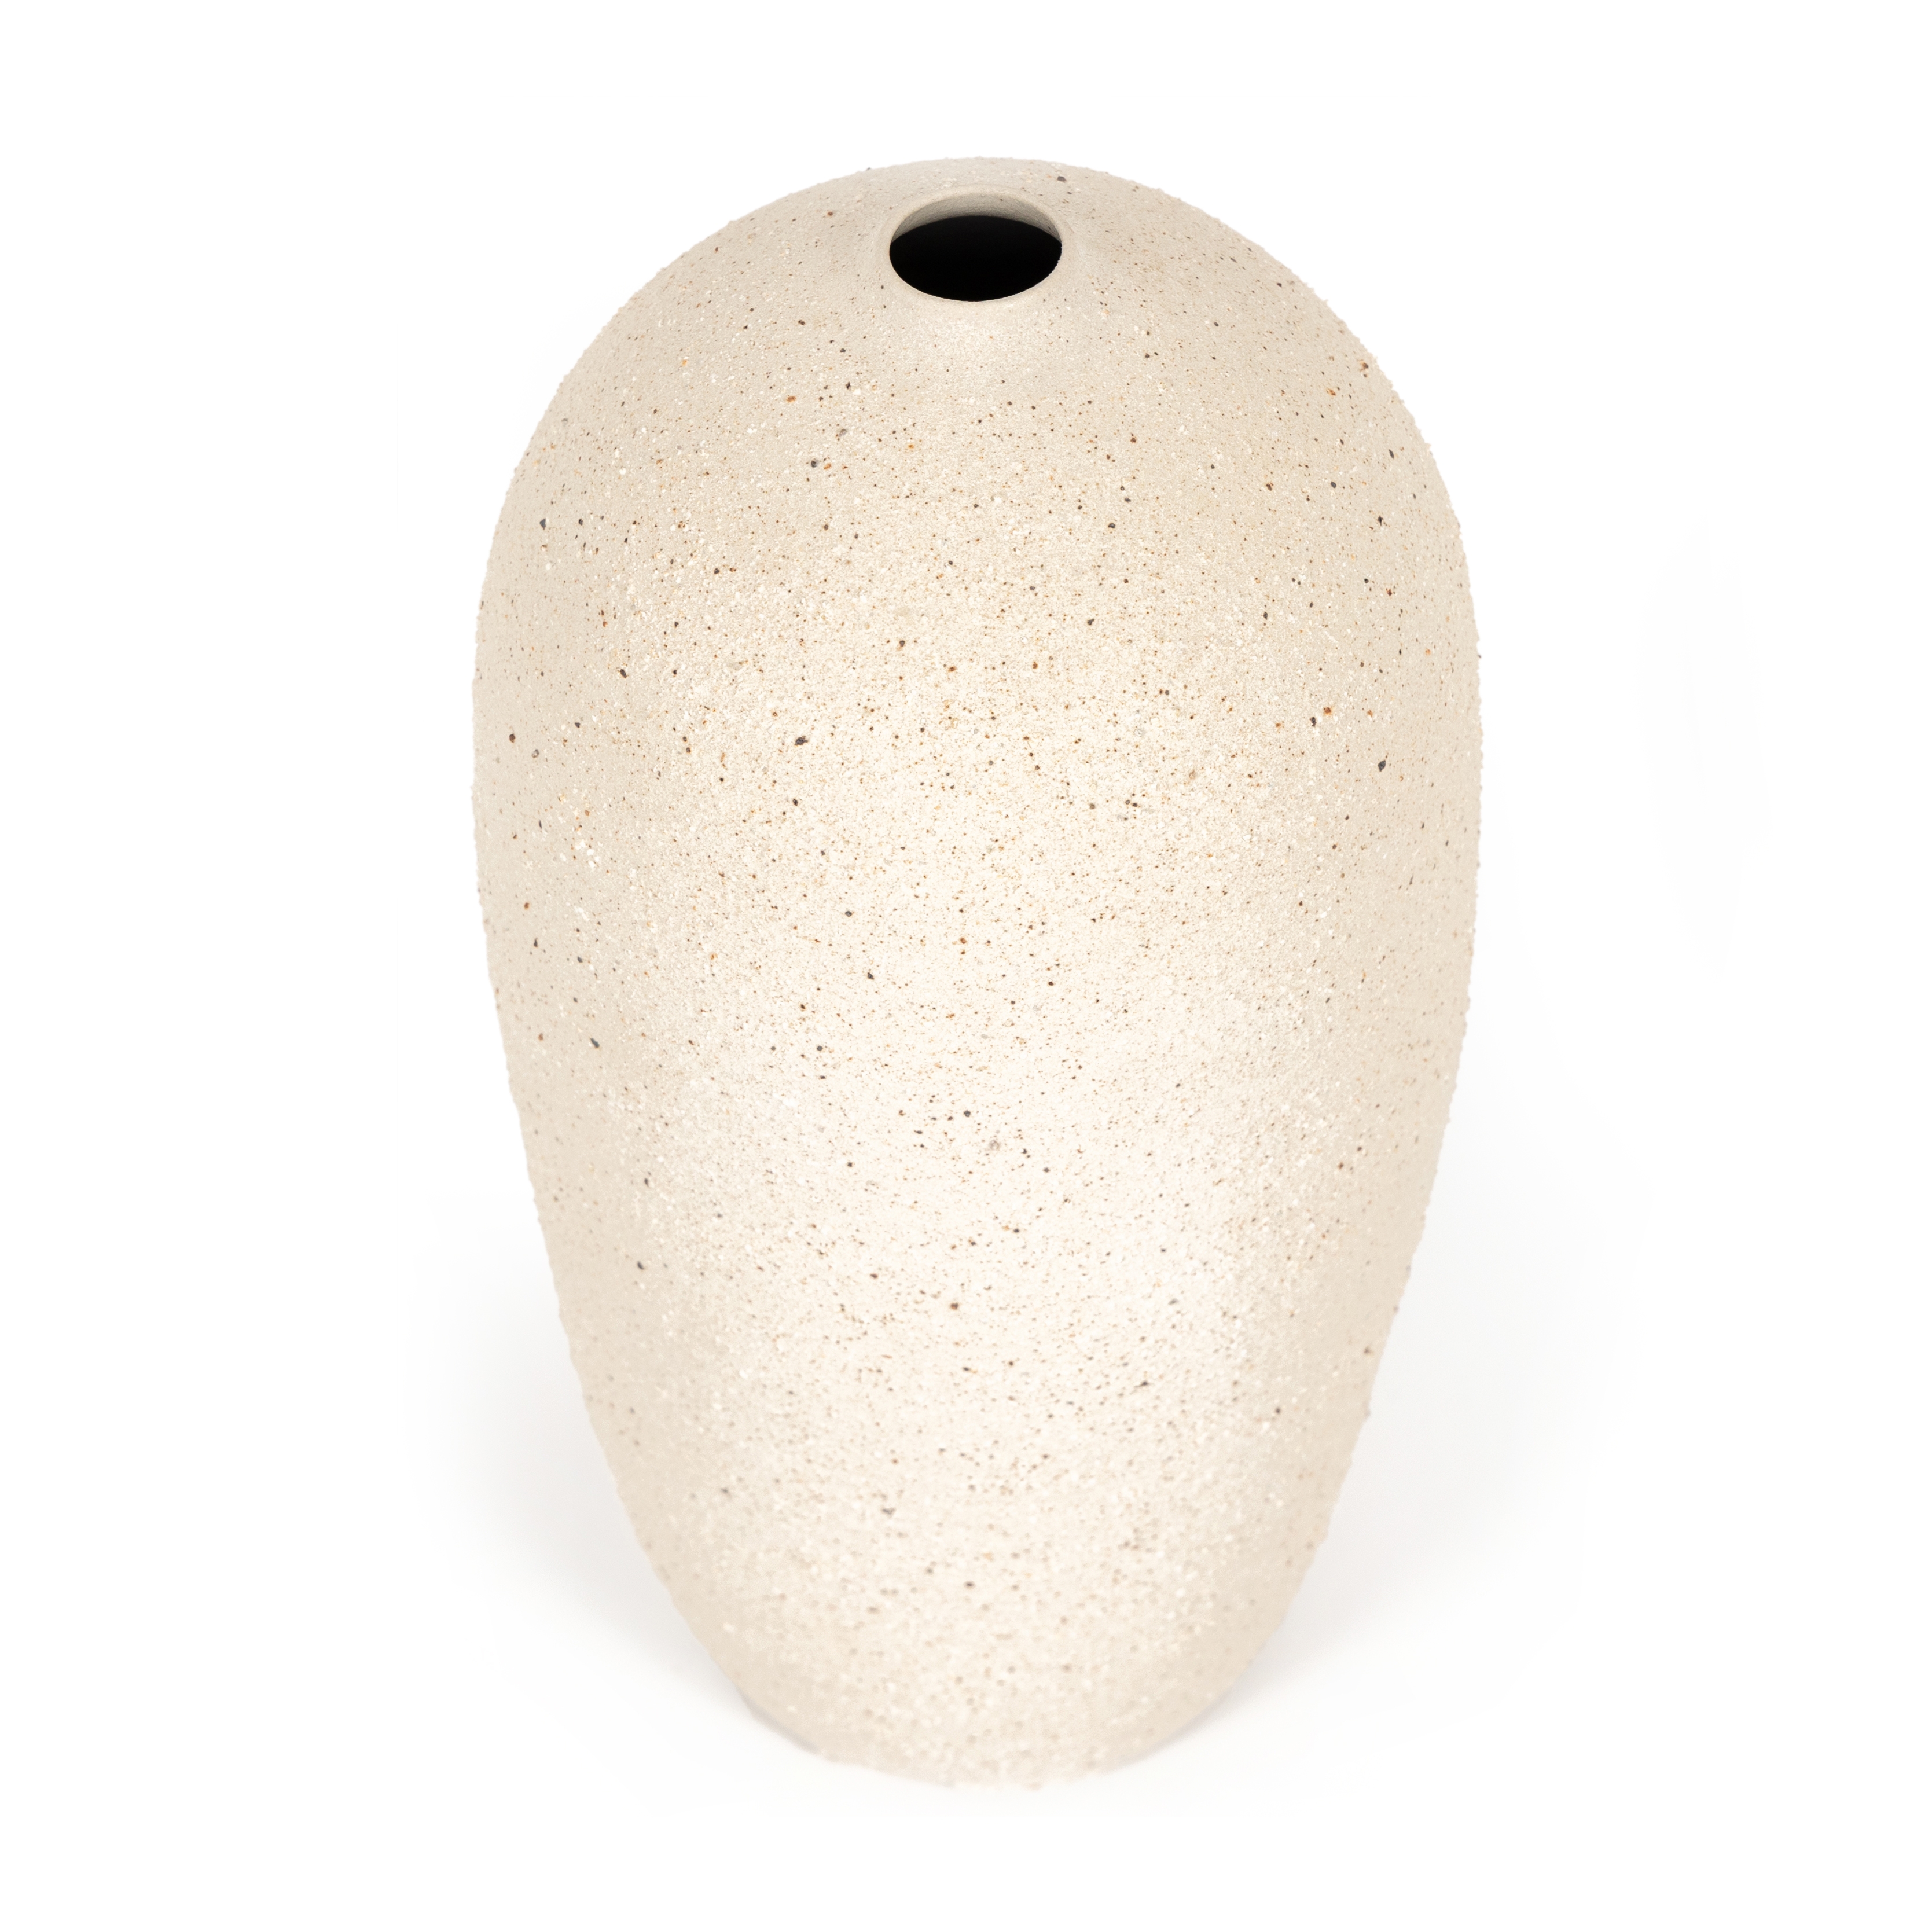 Izan Tall Vase-Natural Grog Ceramic - Image 4